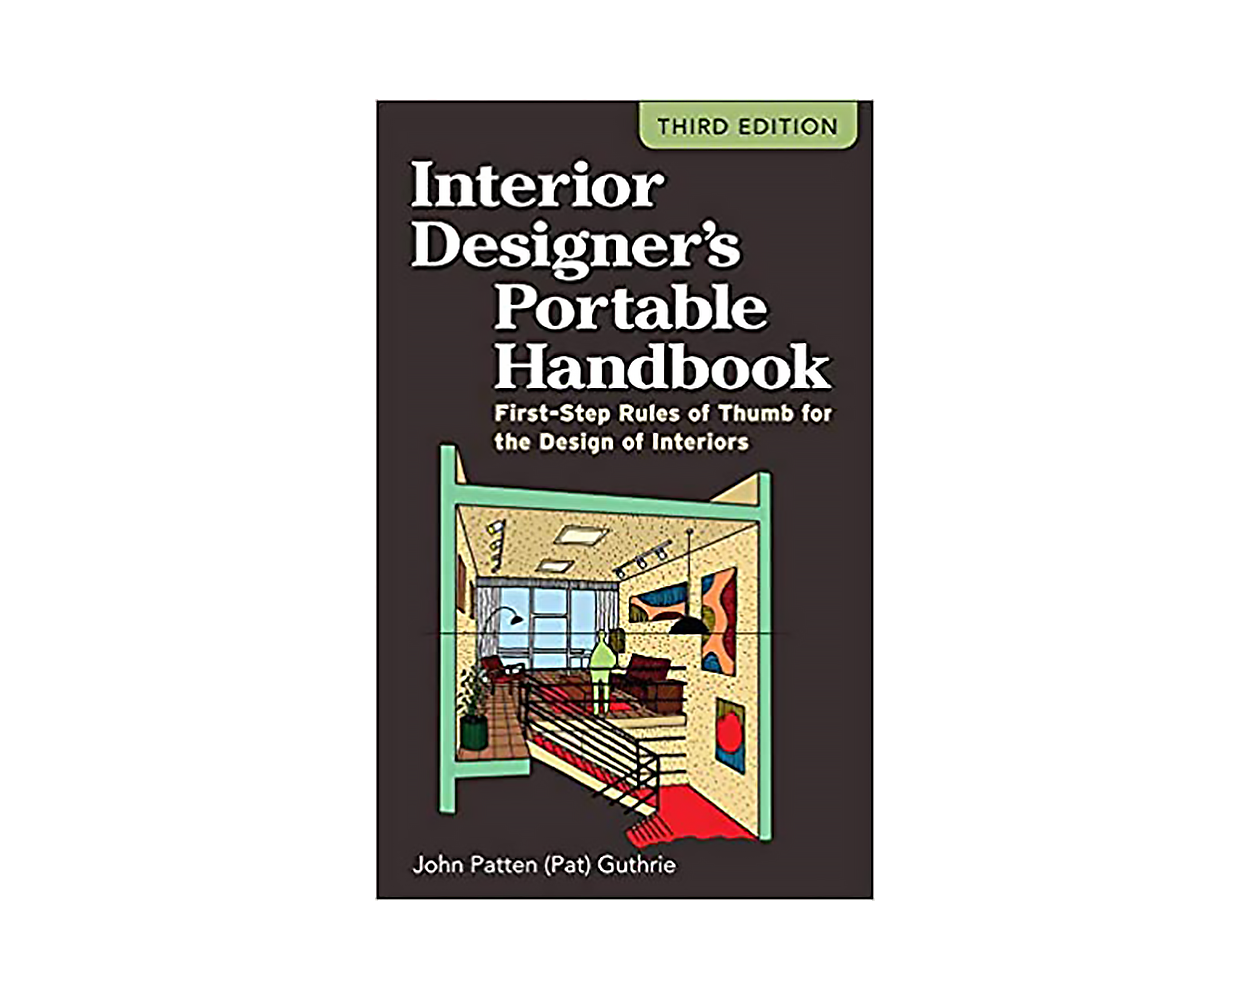 Book Review : The Interior Design Handbook - The Design Sheppard